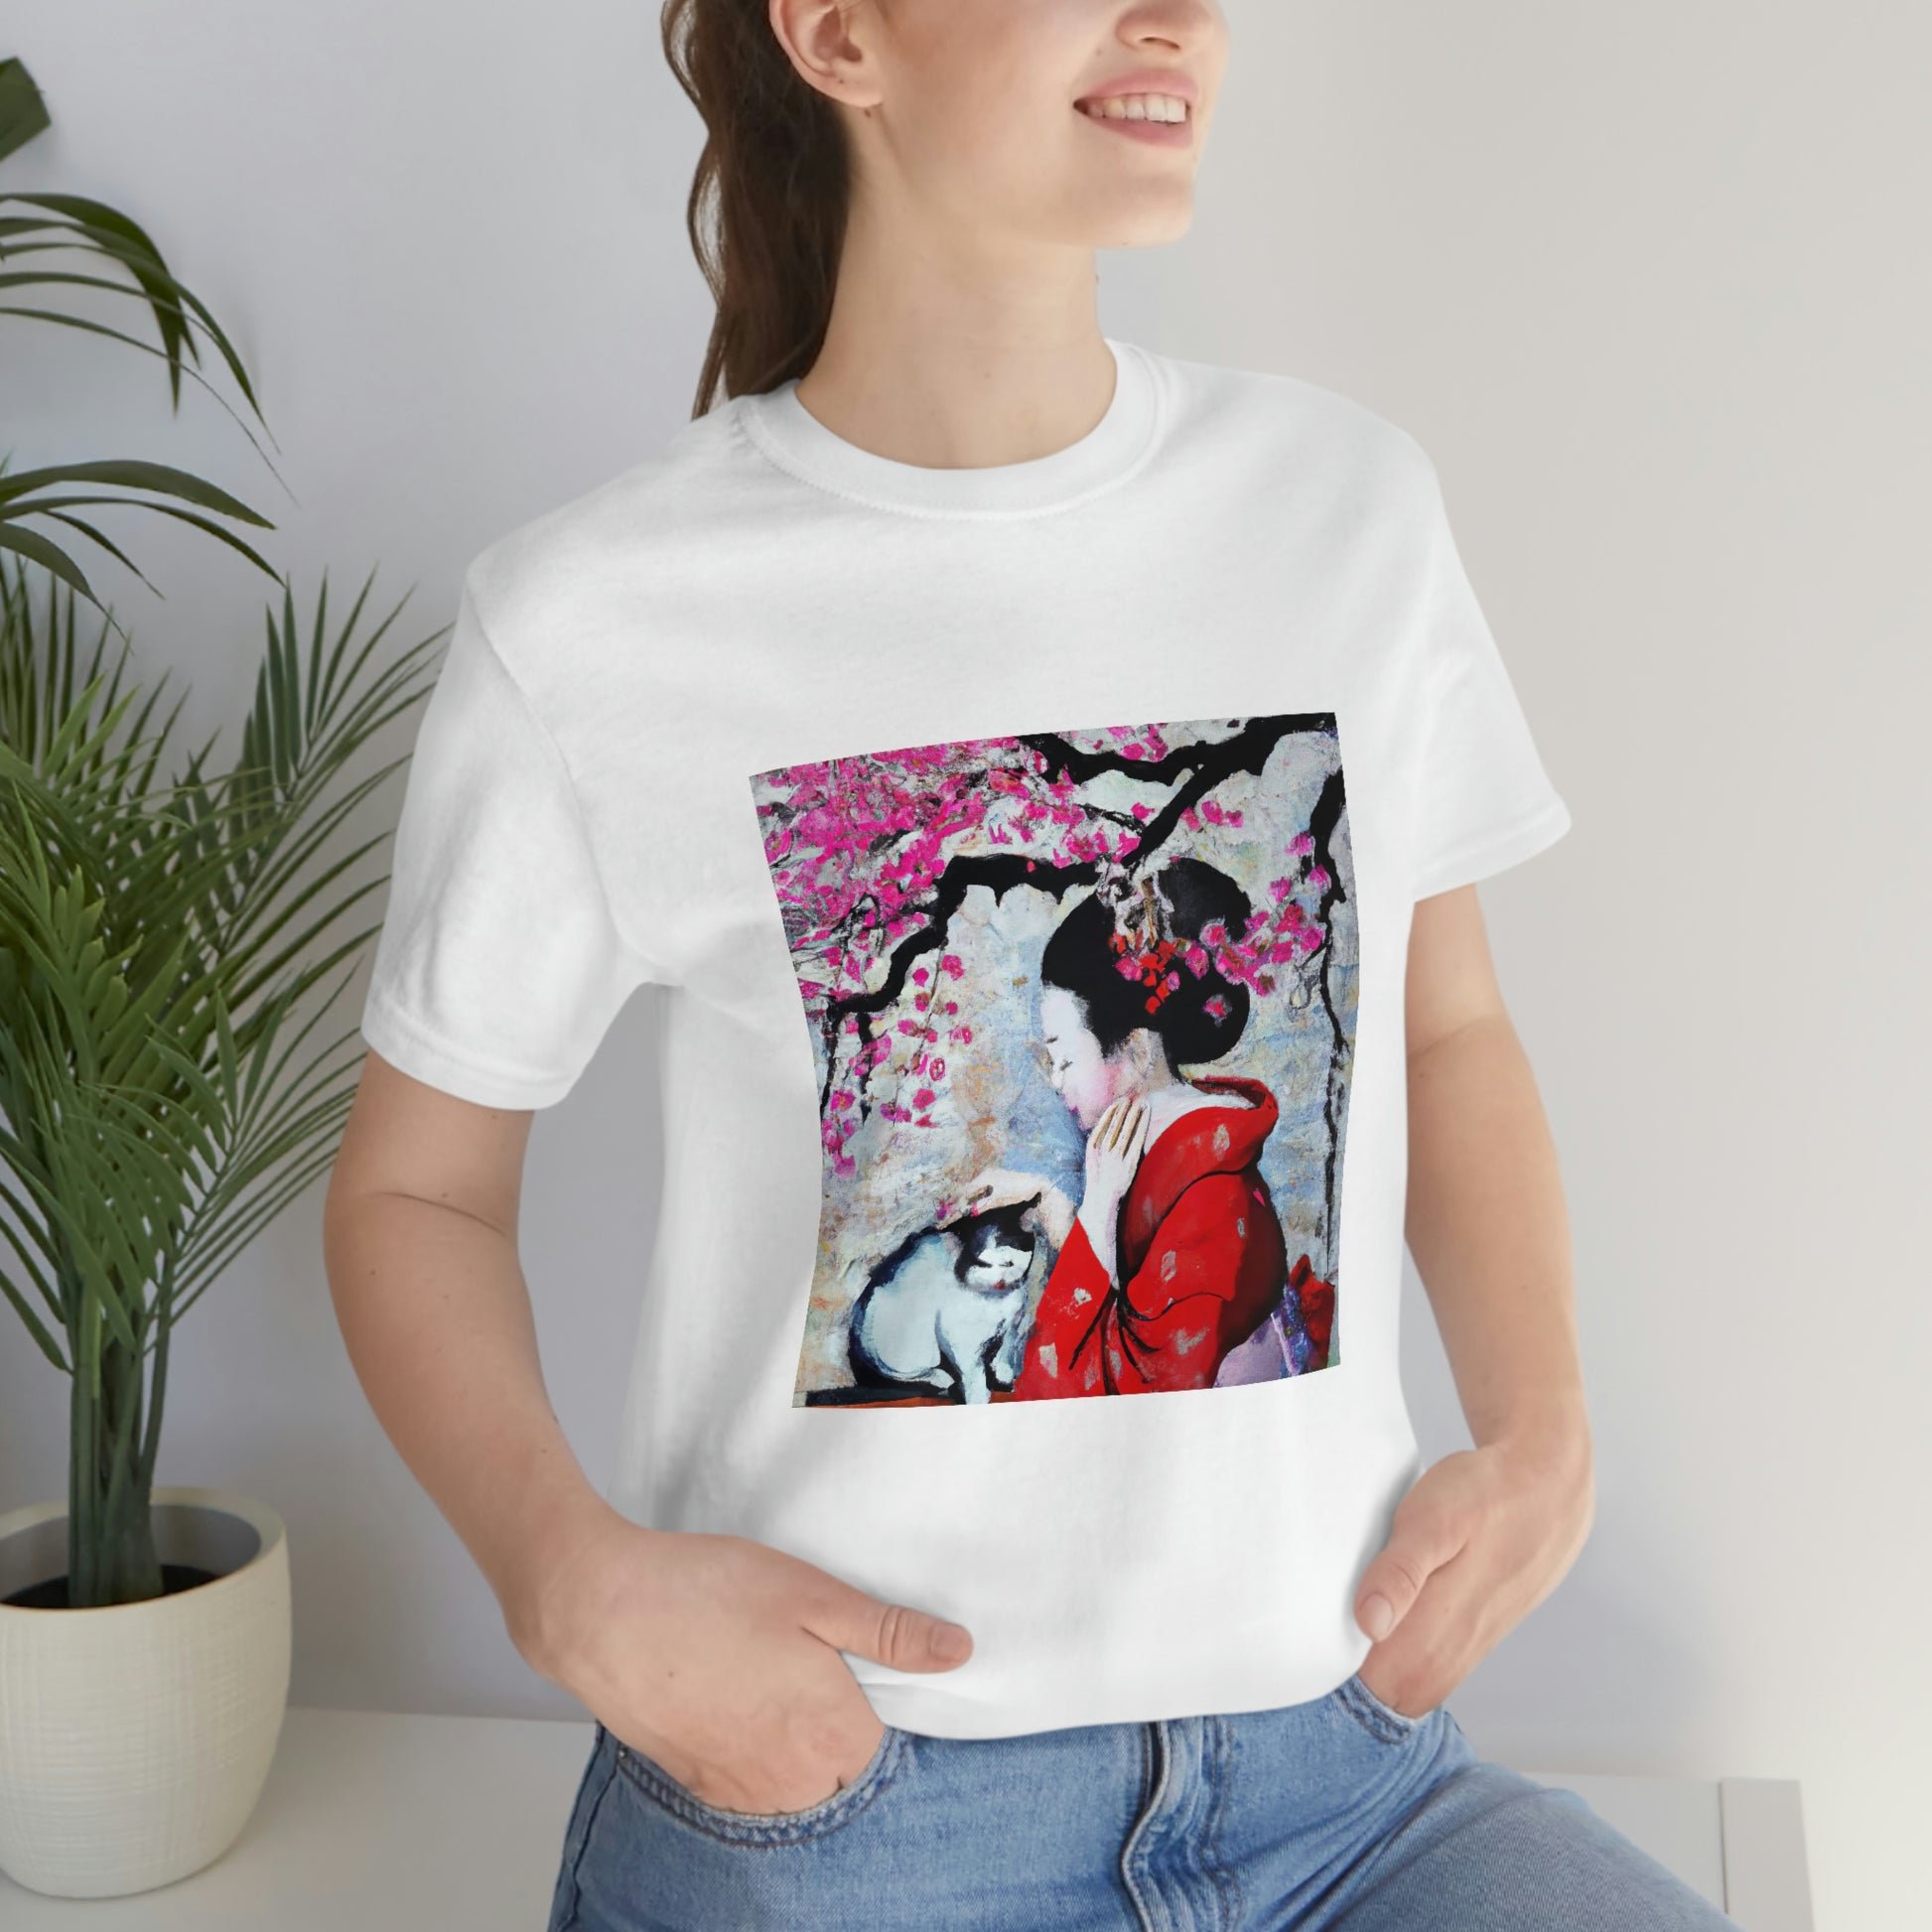 Geisha and a cat T-shirt, art painting maiko and a cat and a sakura tree shirt, Asian-inspired art t shirt, feudal japan tee, cat lover gift